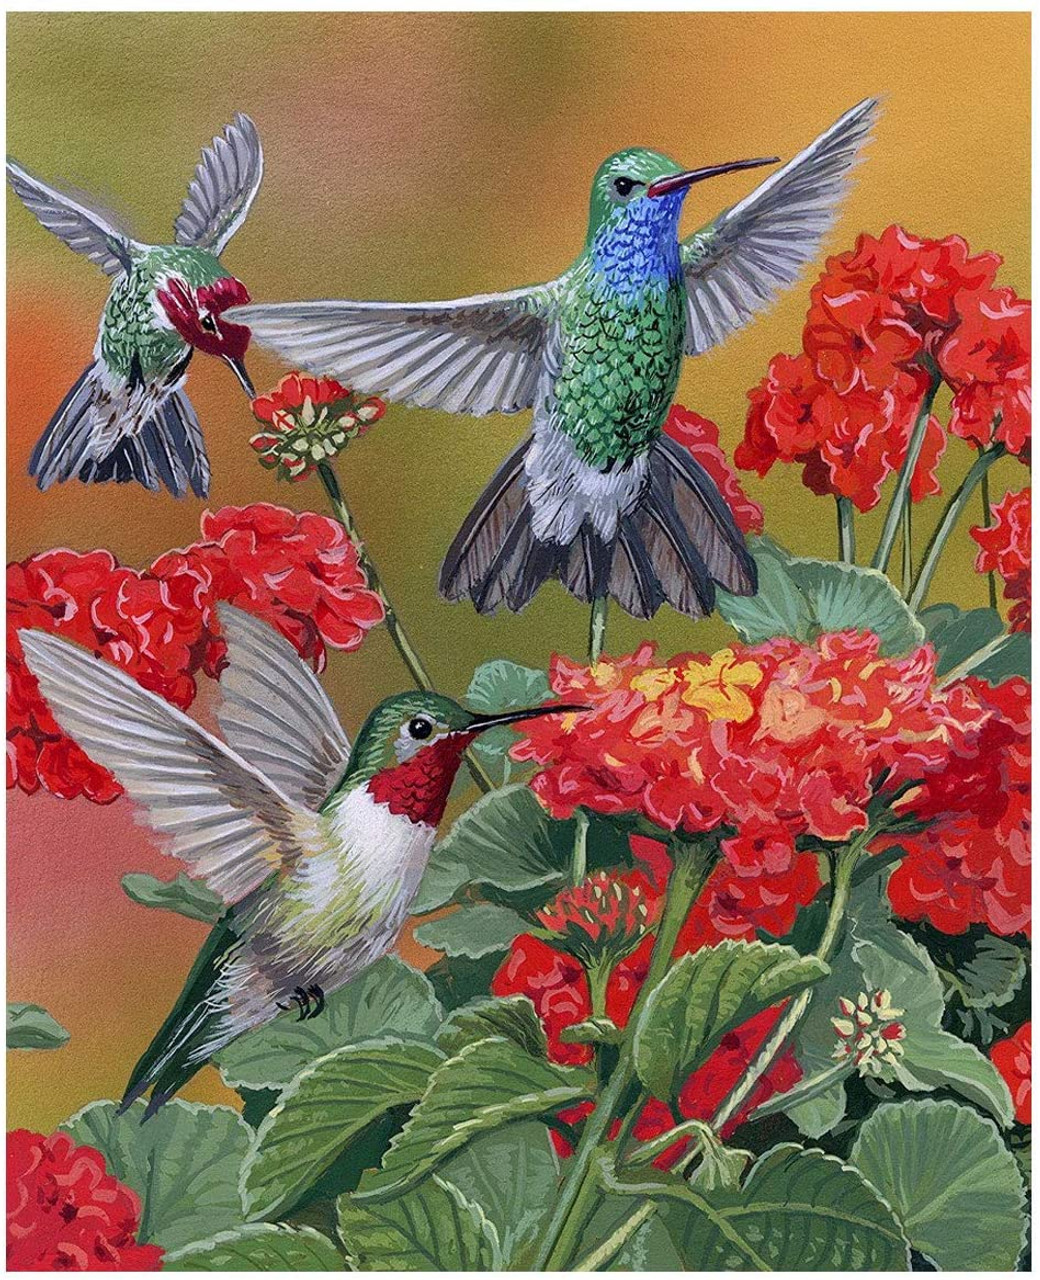 5D Diamond Painting Three Hummingbirds Kit - Bonanza Marketplace